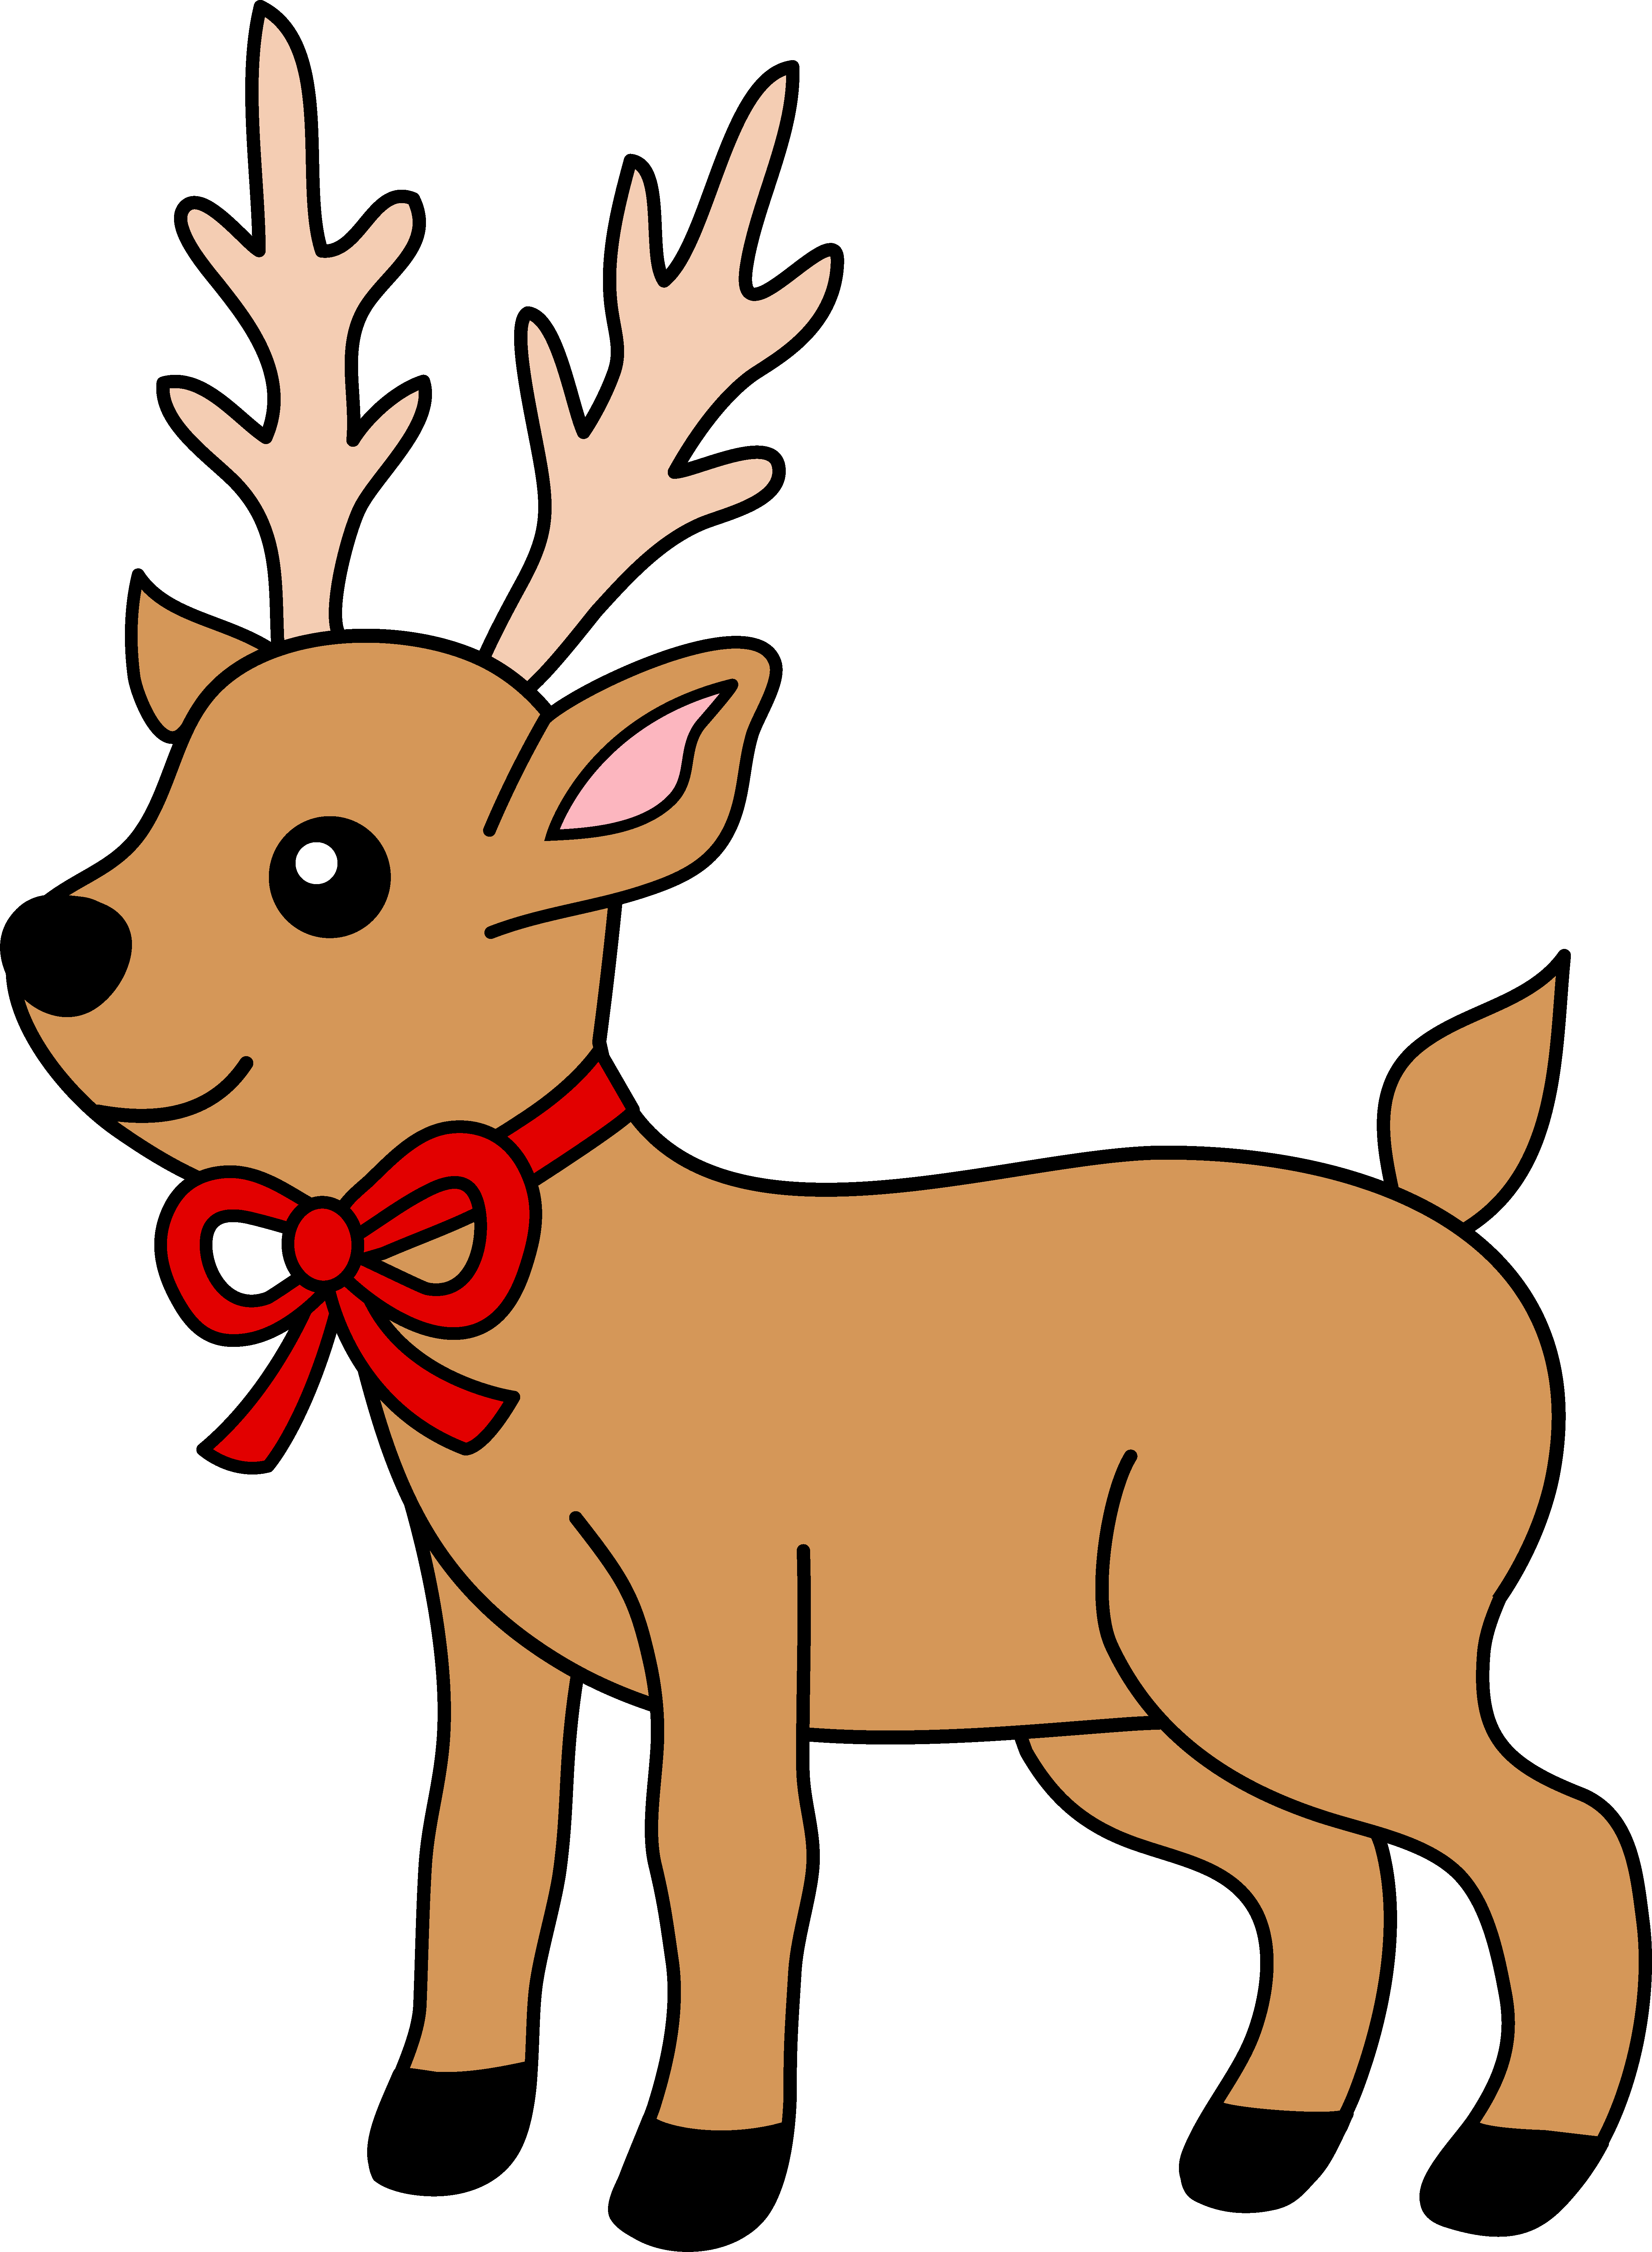 Christmas reindeer images clip art